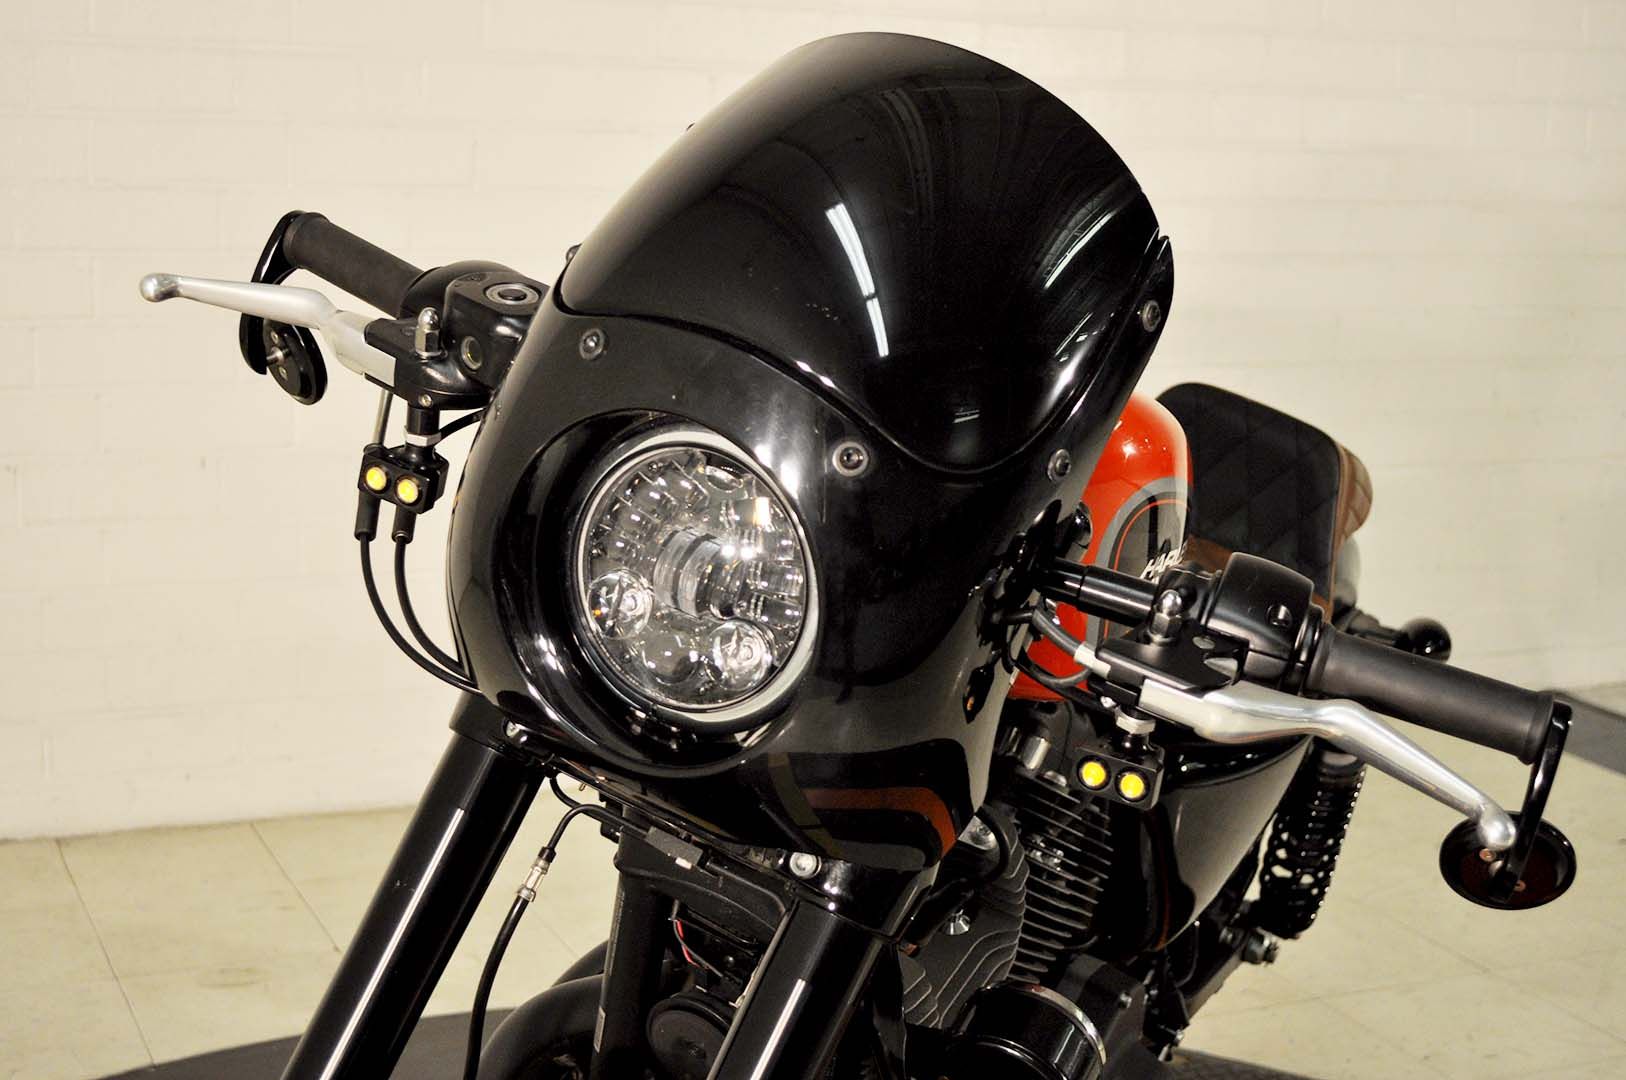 2020 Harley-Davidson Roadster™ in Winston Salem, North Carolina - Photo 7